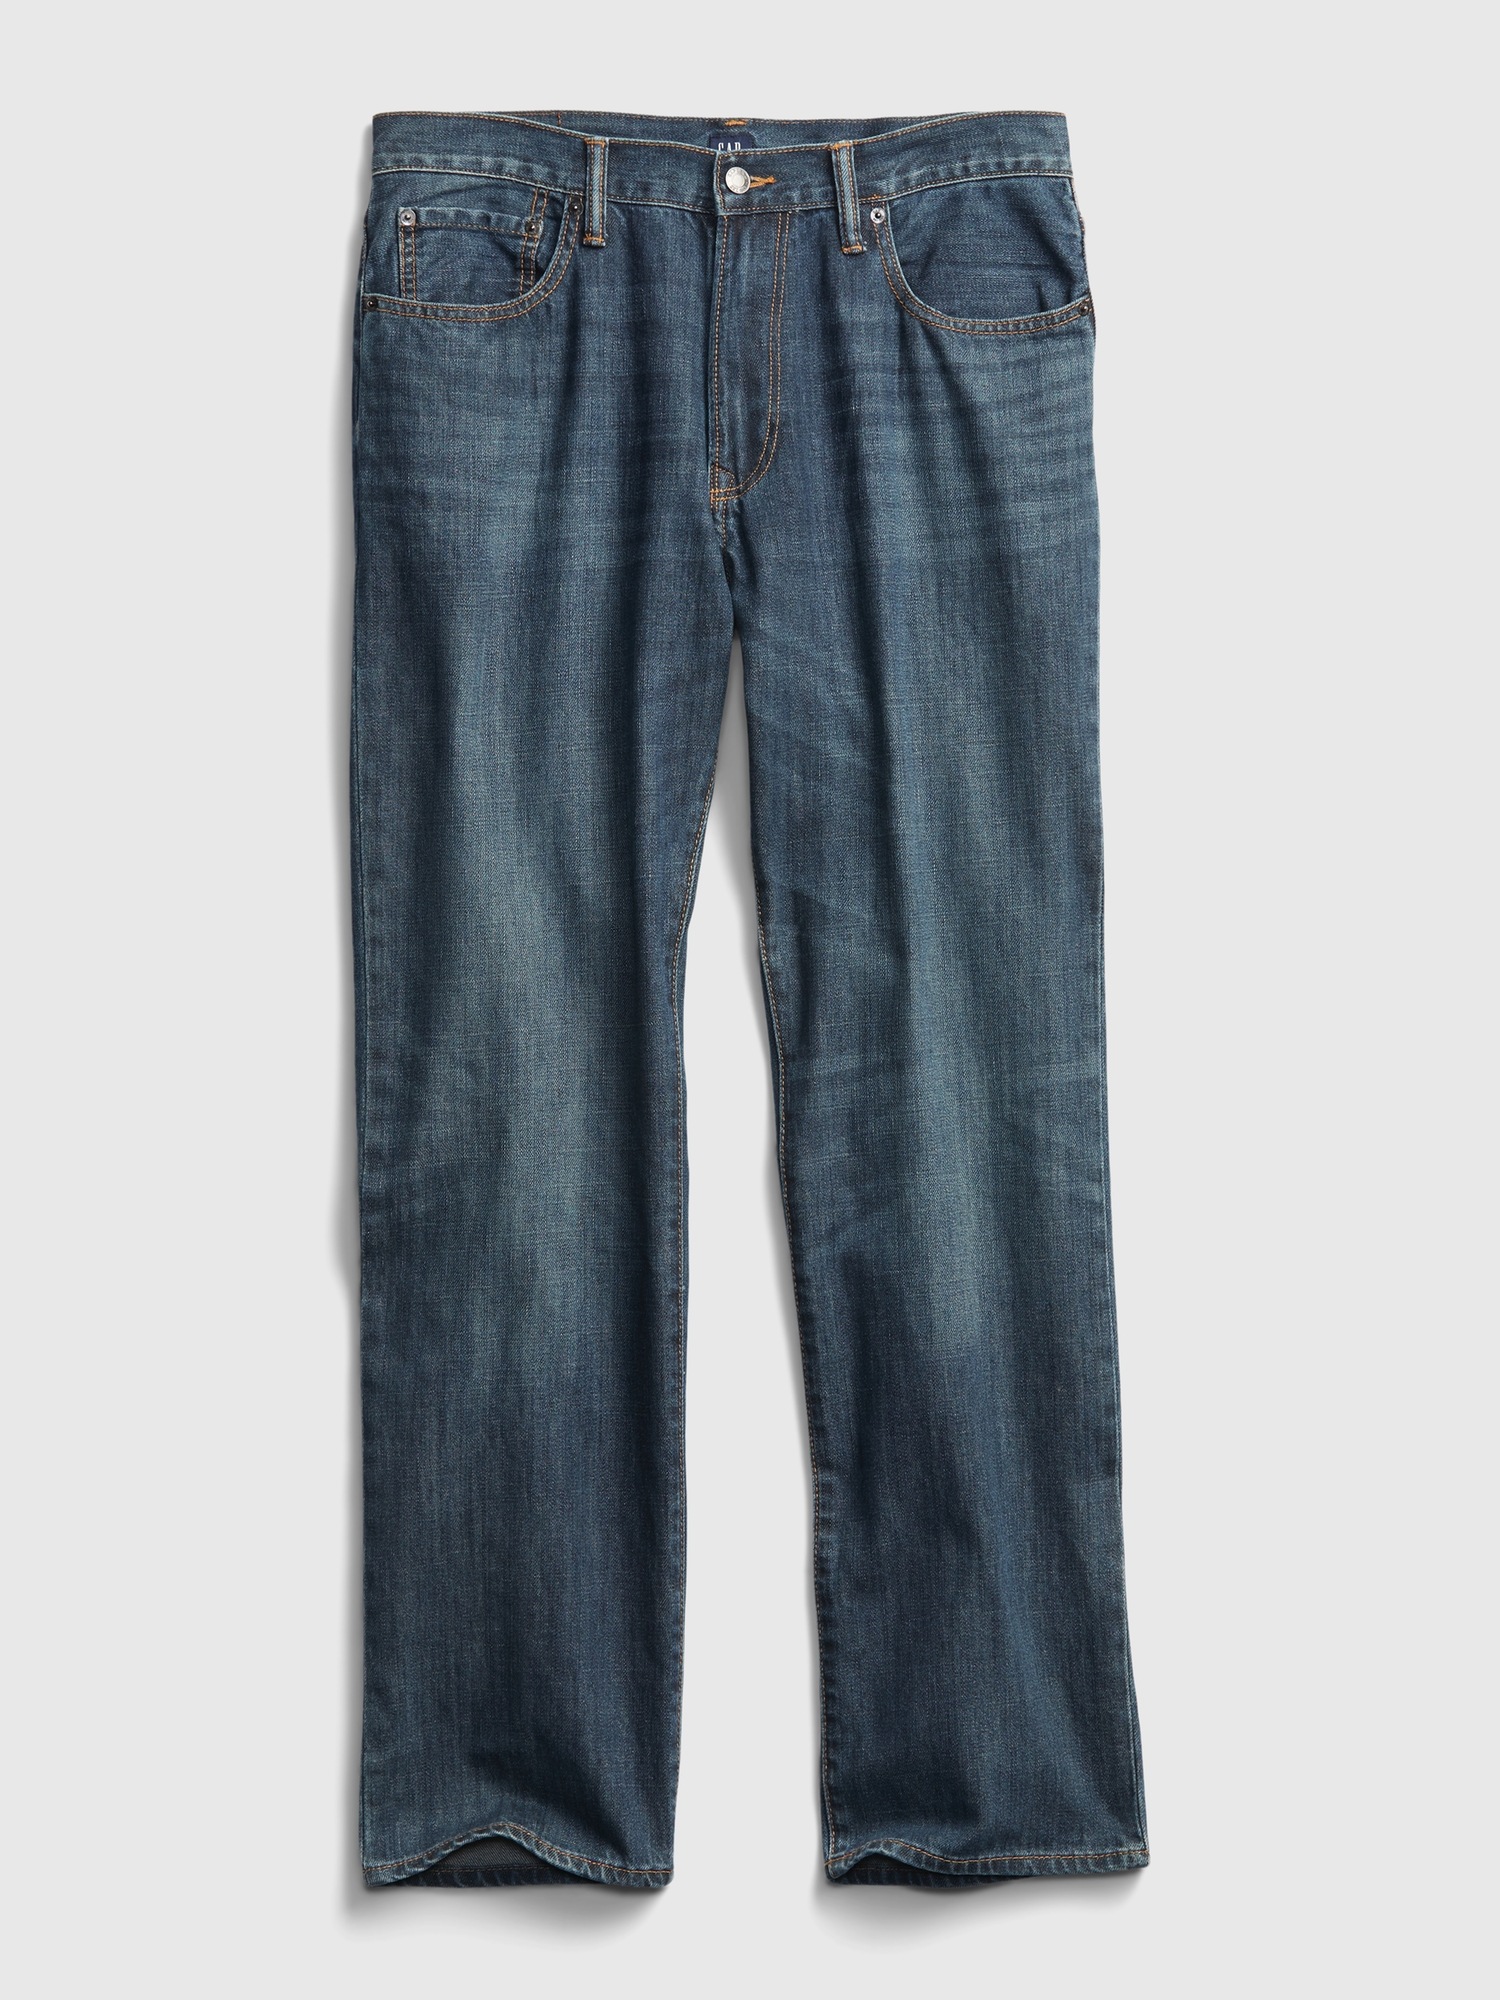 gap blue jeans world standard